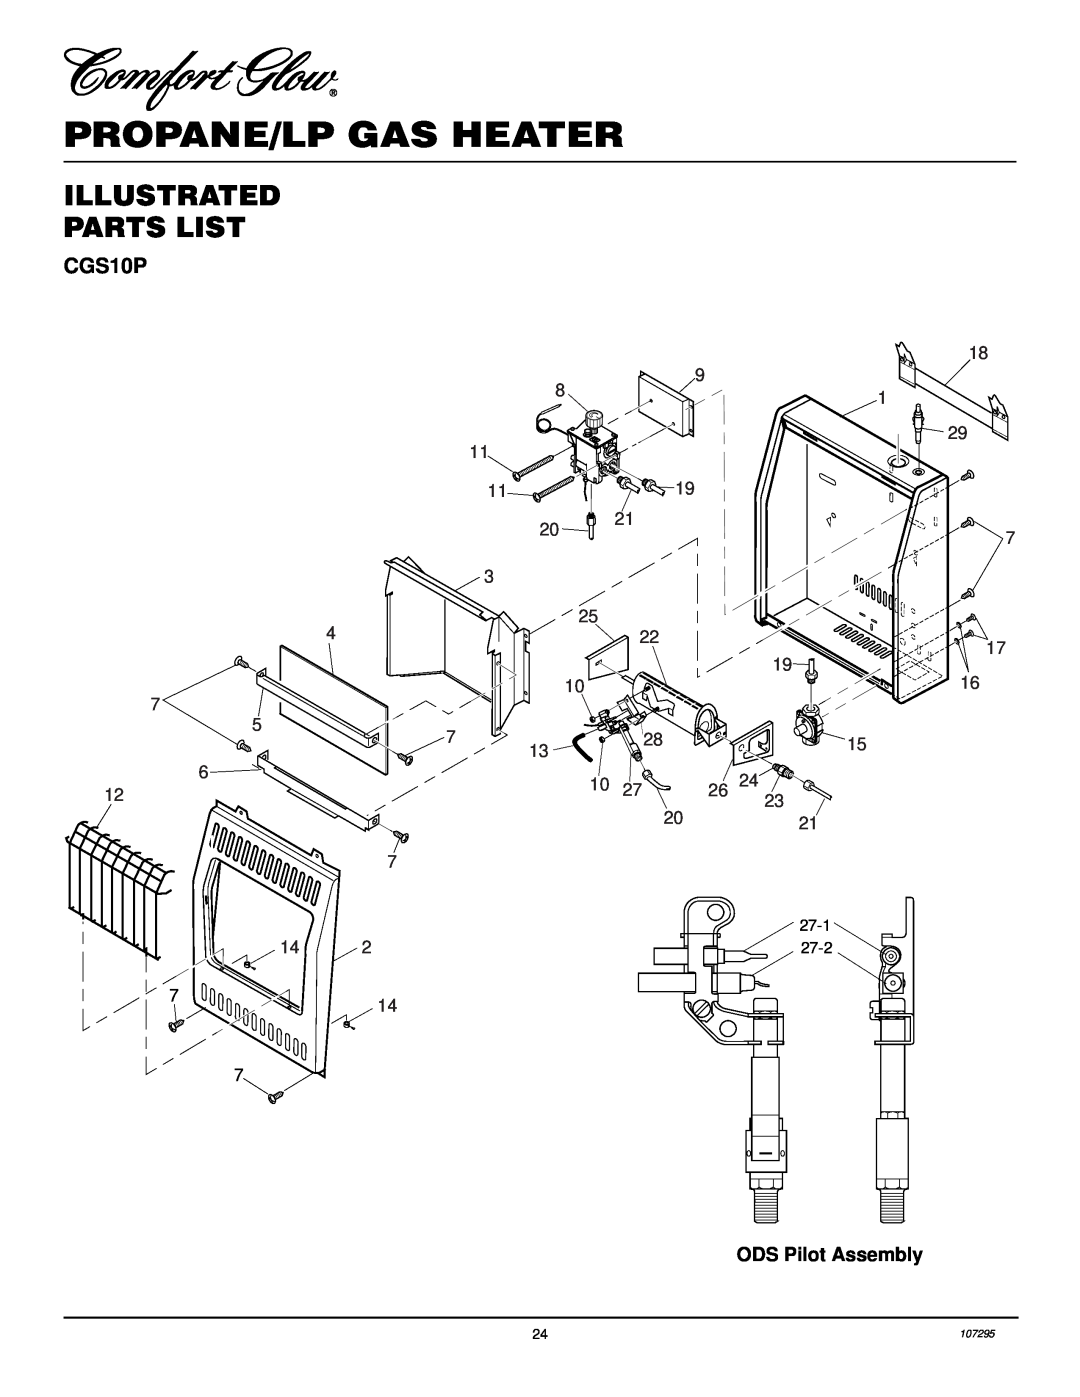 Desa CGS10P, CG6P, CG10P installation manual Propane/Lp Gas Heater, Illustrated Parts List 